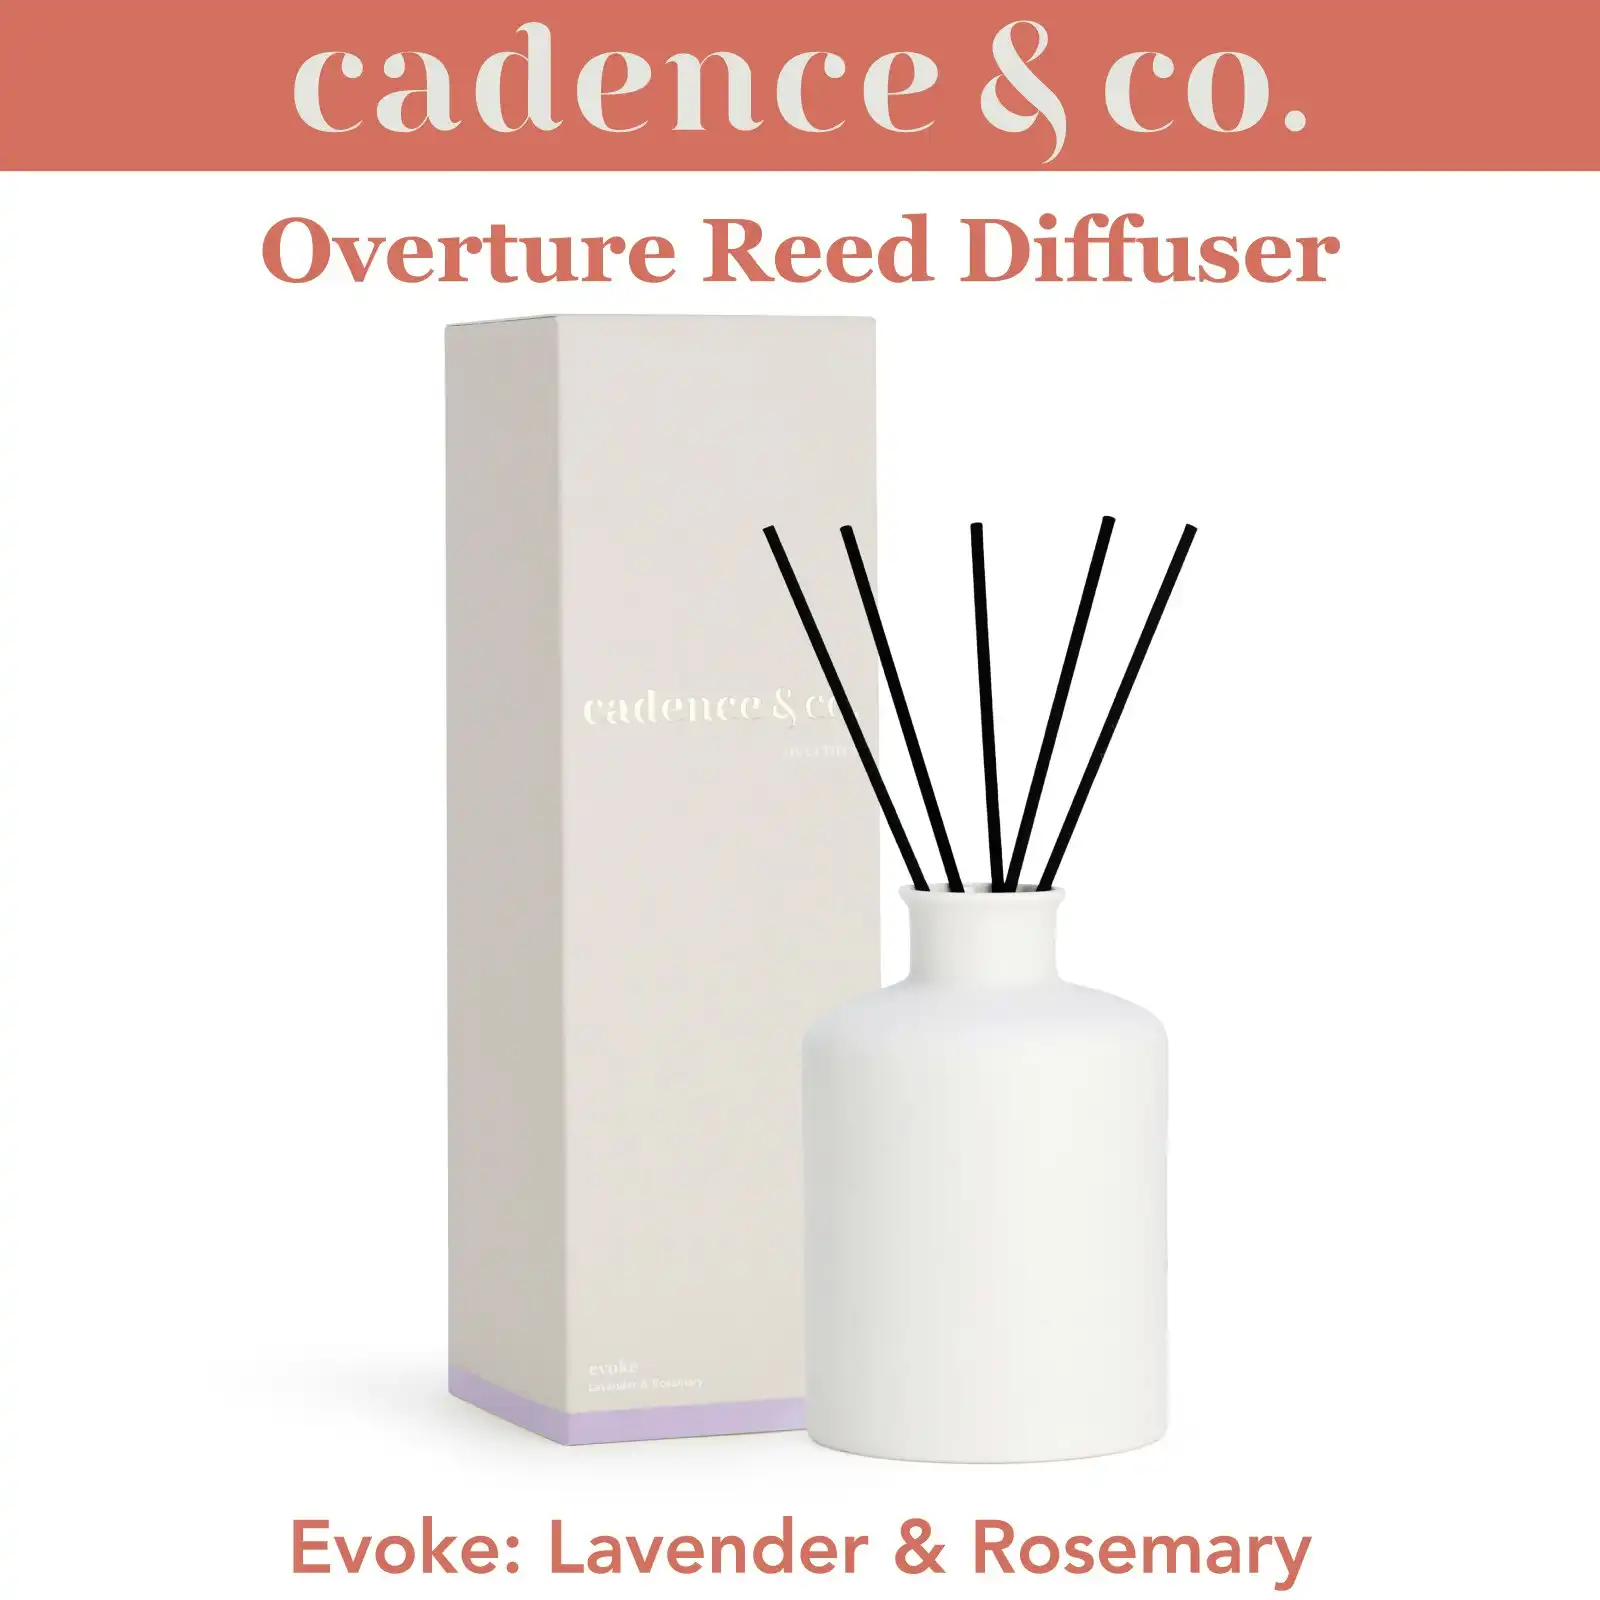 Cadence & Co Overture Reed Diffuser Evoke: Lavender & Rosemary Natural Room Freshener w/ Essential Oils